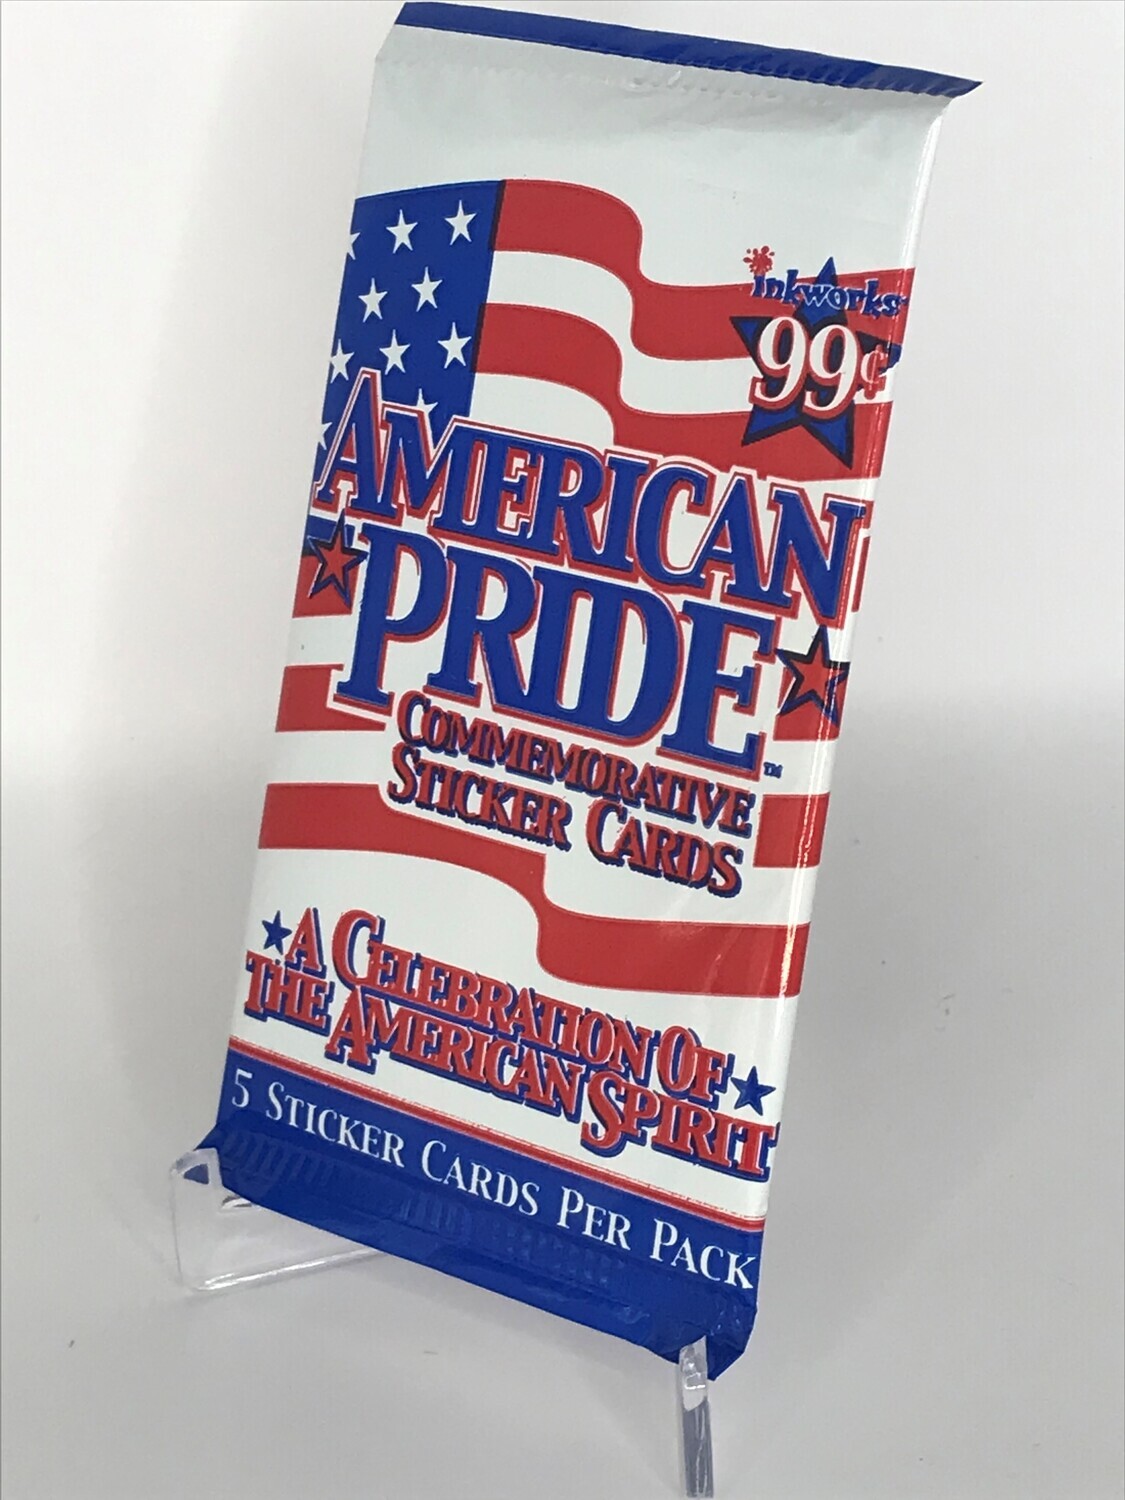 American Pride Commemorative Sticker Cards Pack